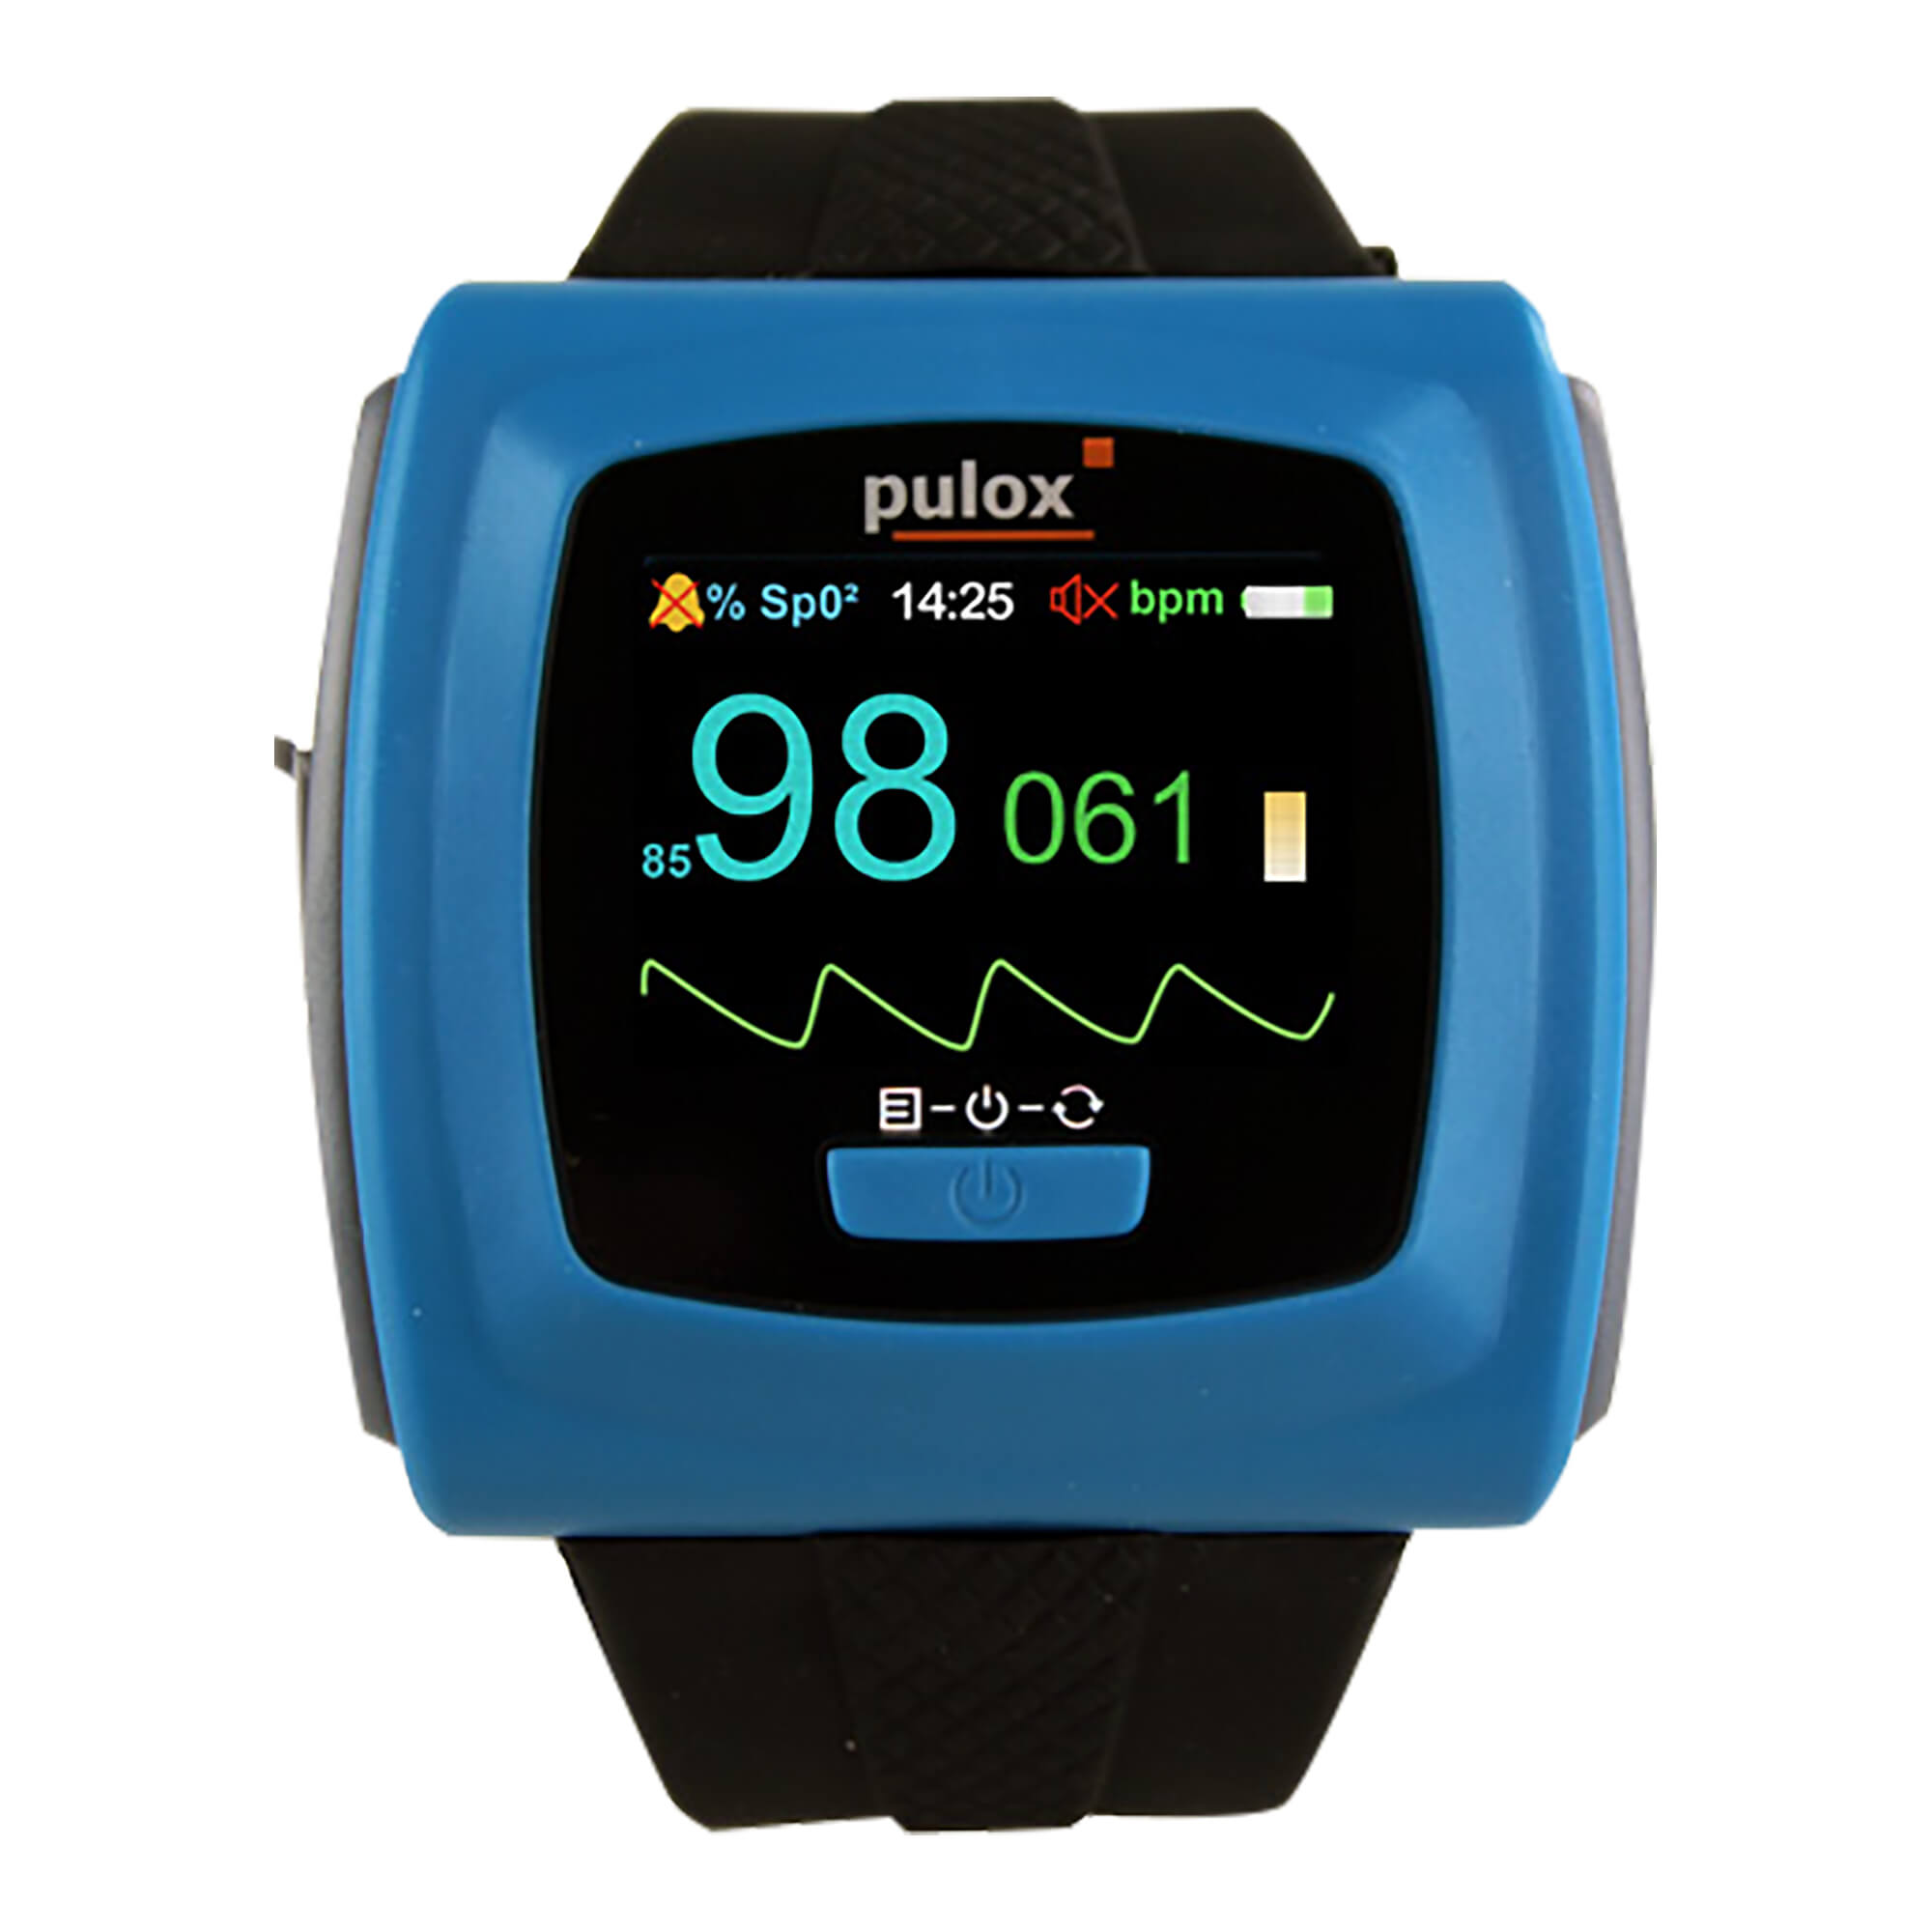 Pulsoximeter mit Armband, Externem Fingersensor, Akku und Software. Farbe: blau.